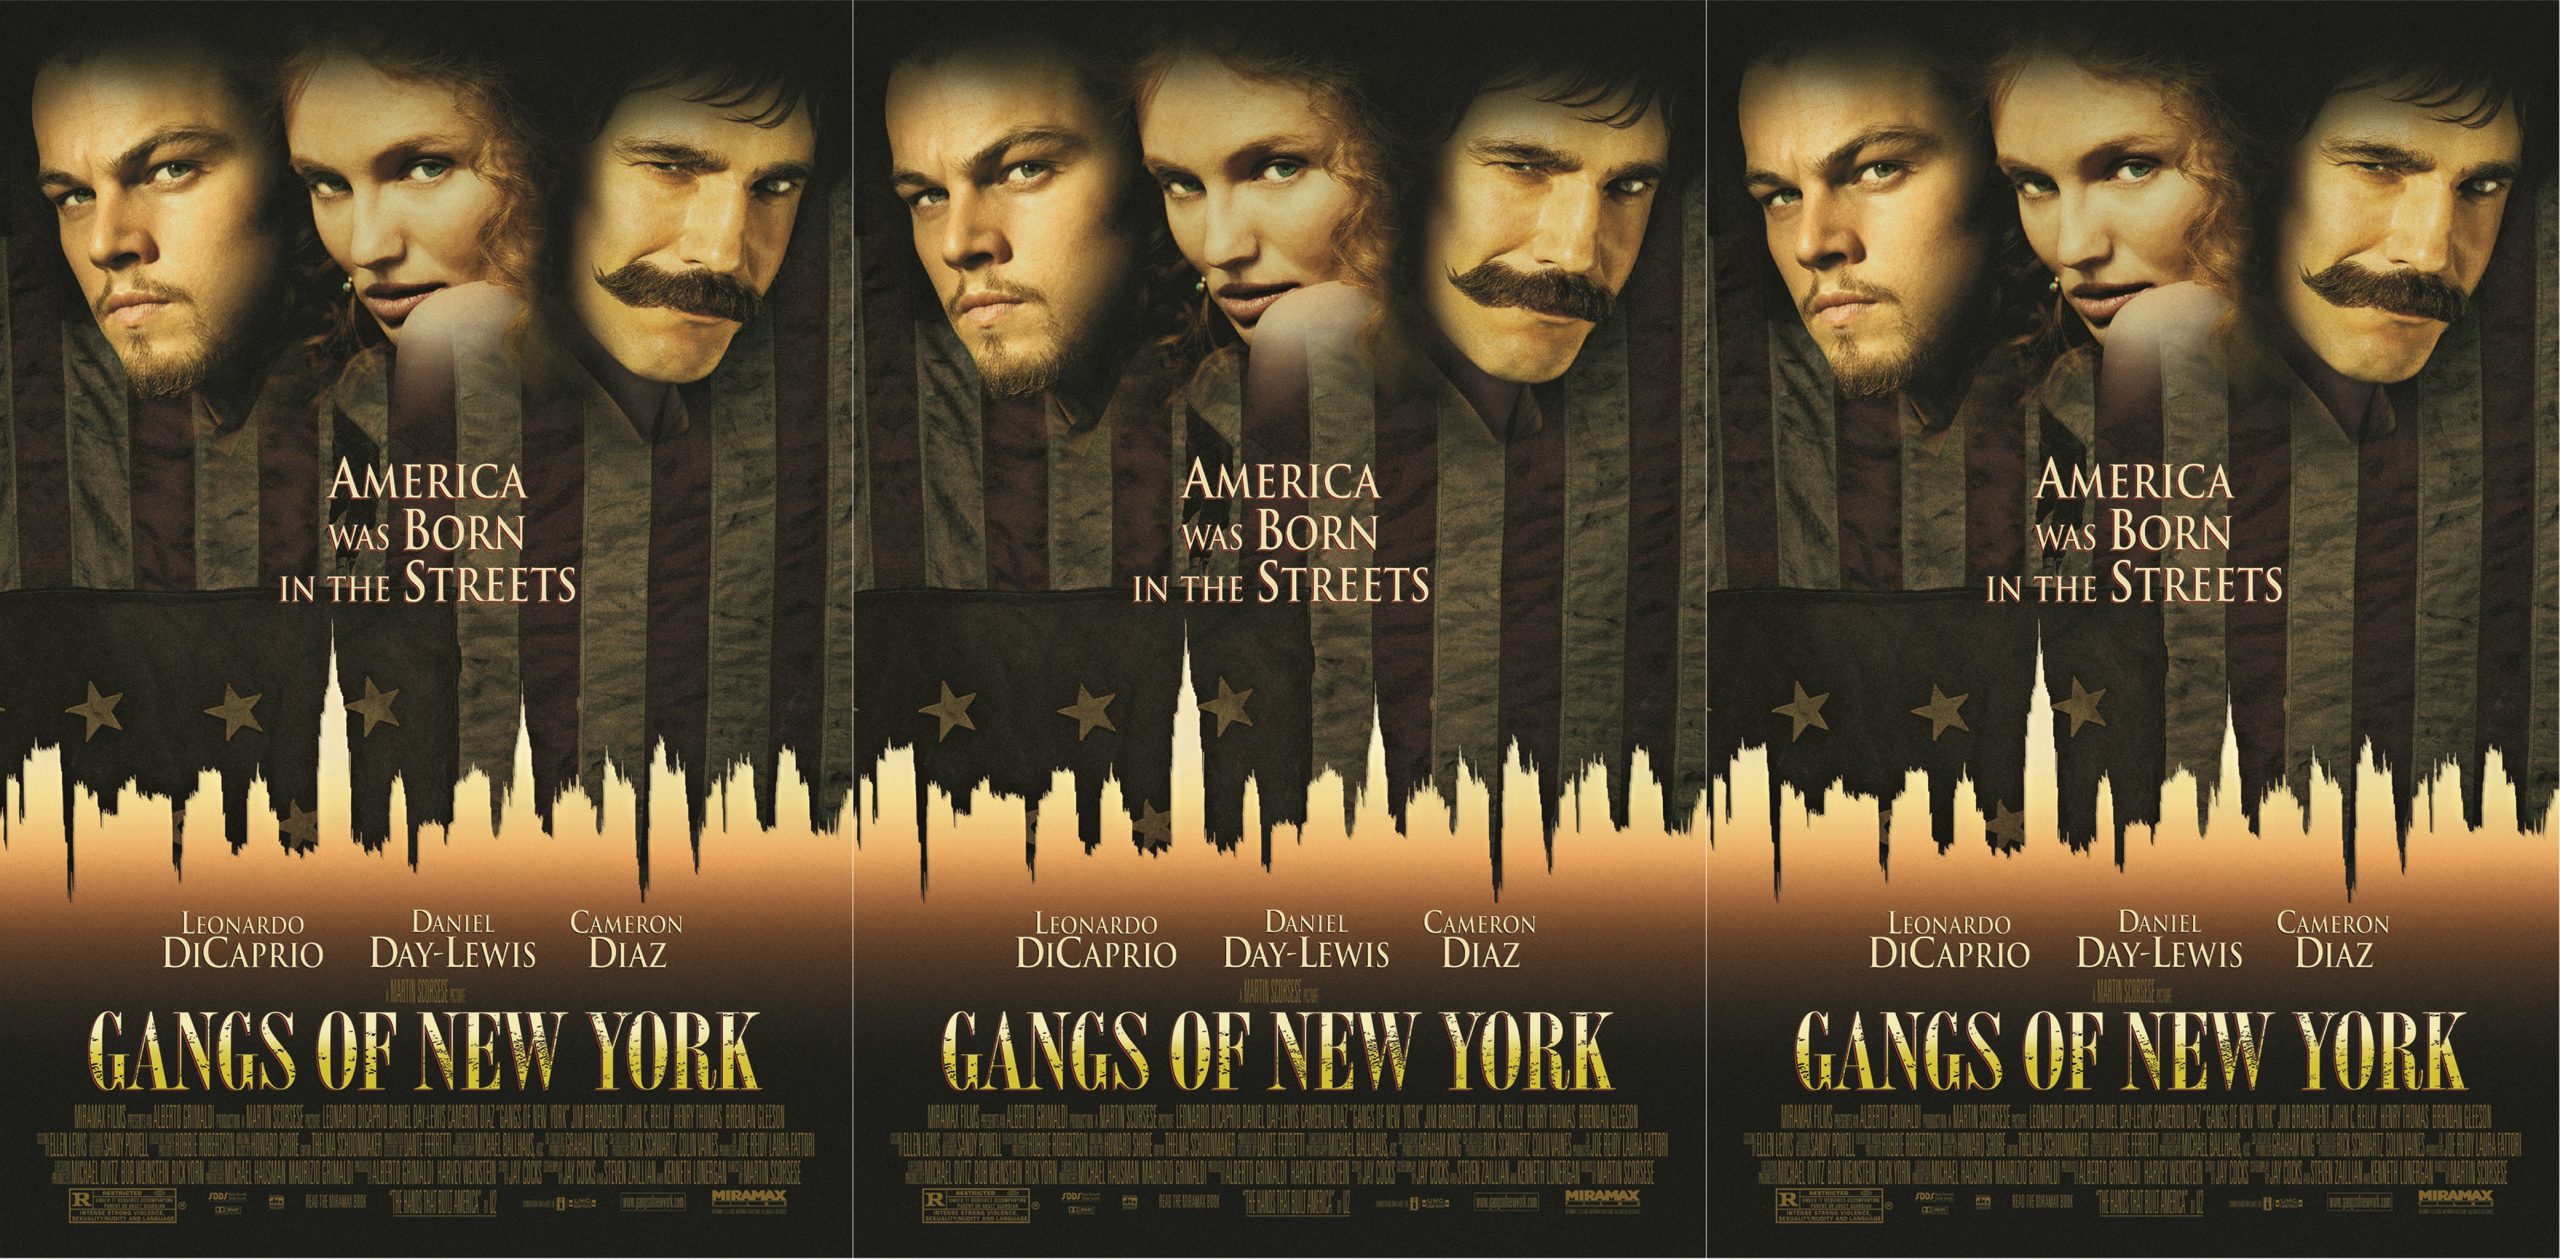 Gangs of New York, Max, Miramax, Initial Entertainment Group, Alberto Grimaldi Productions